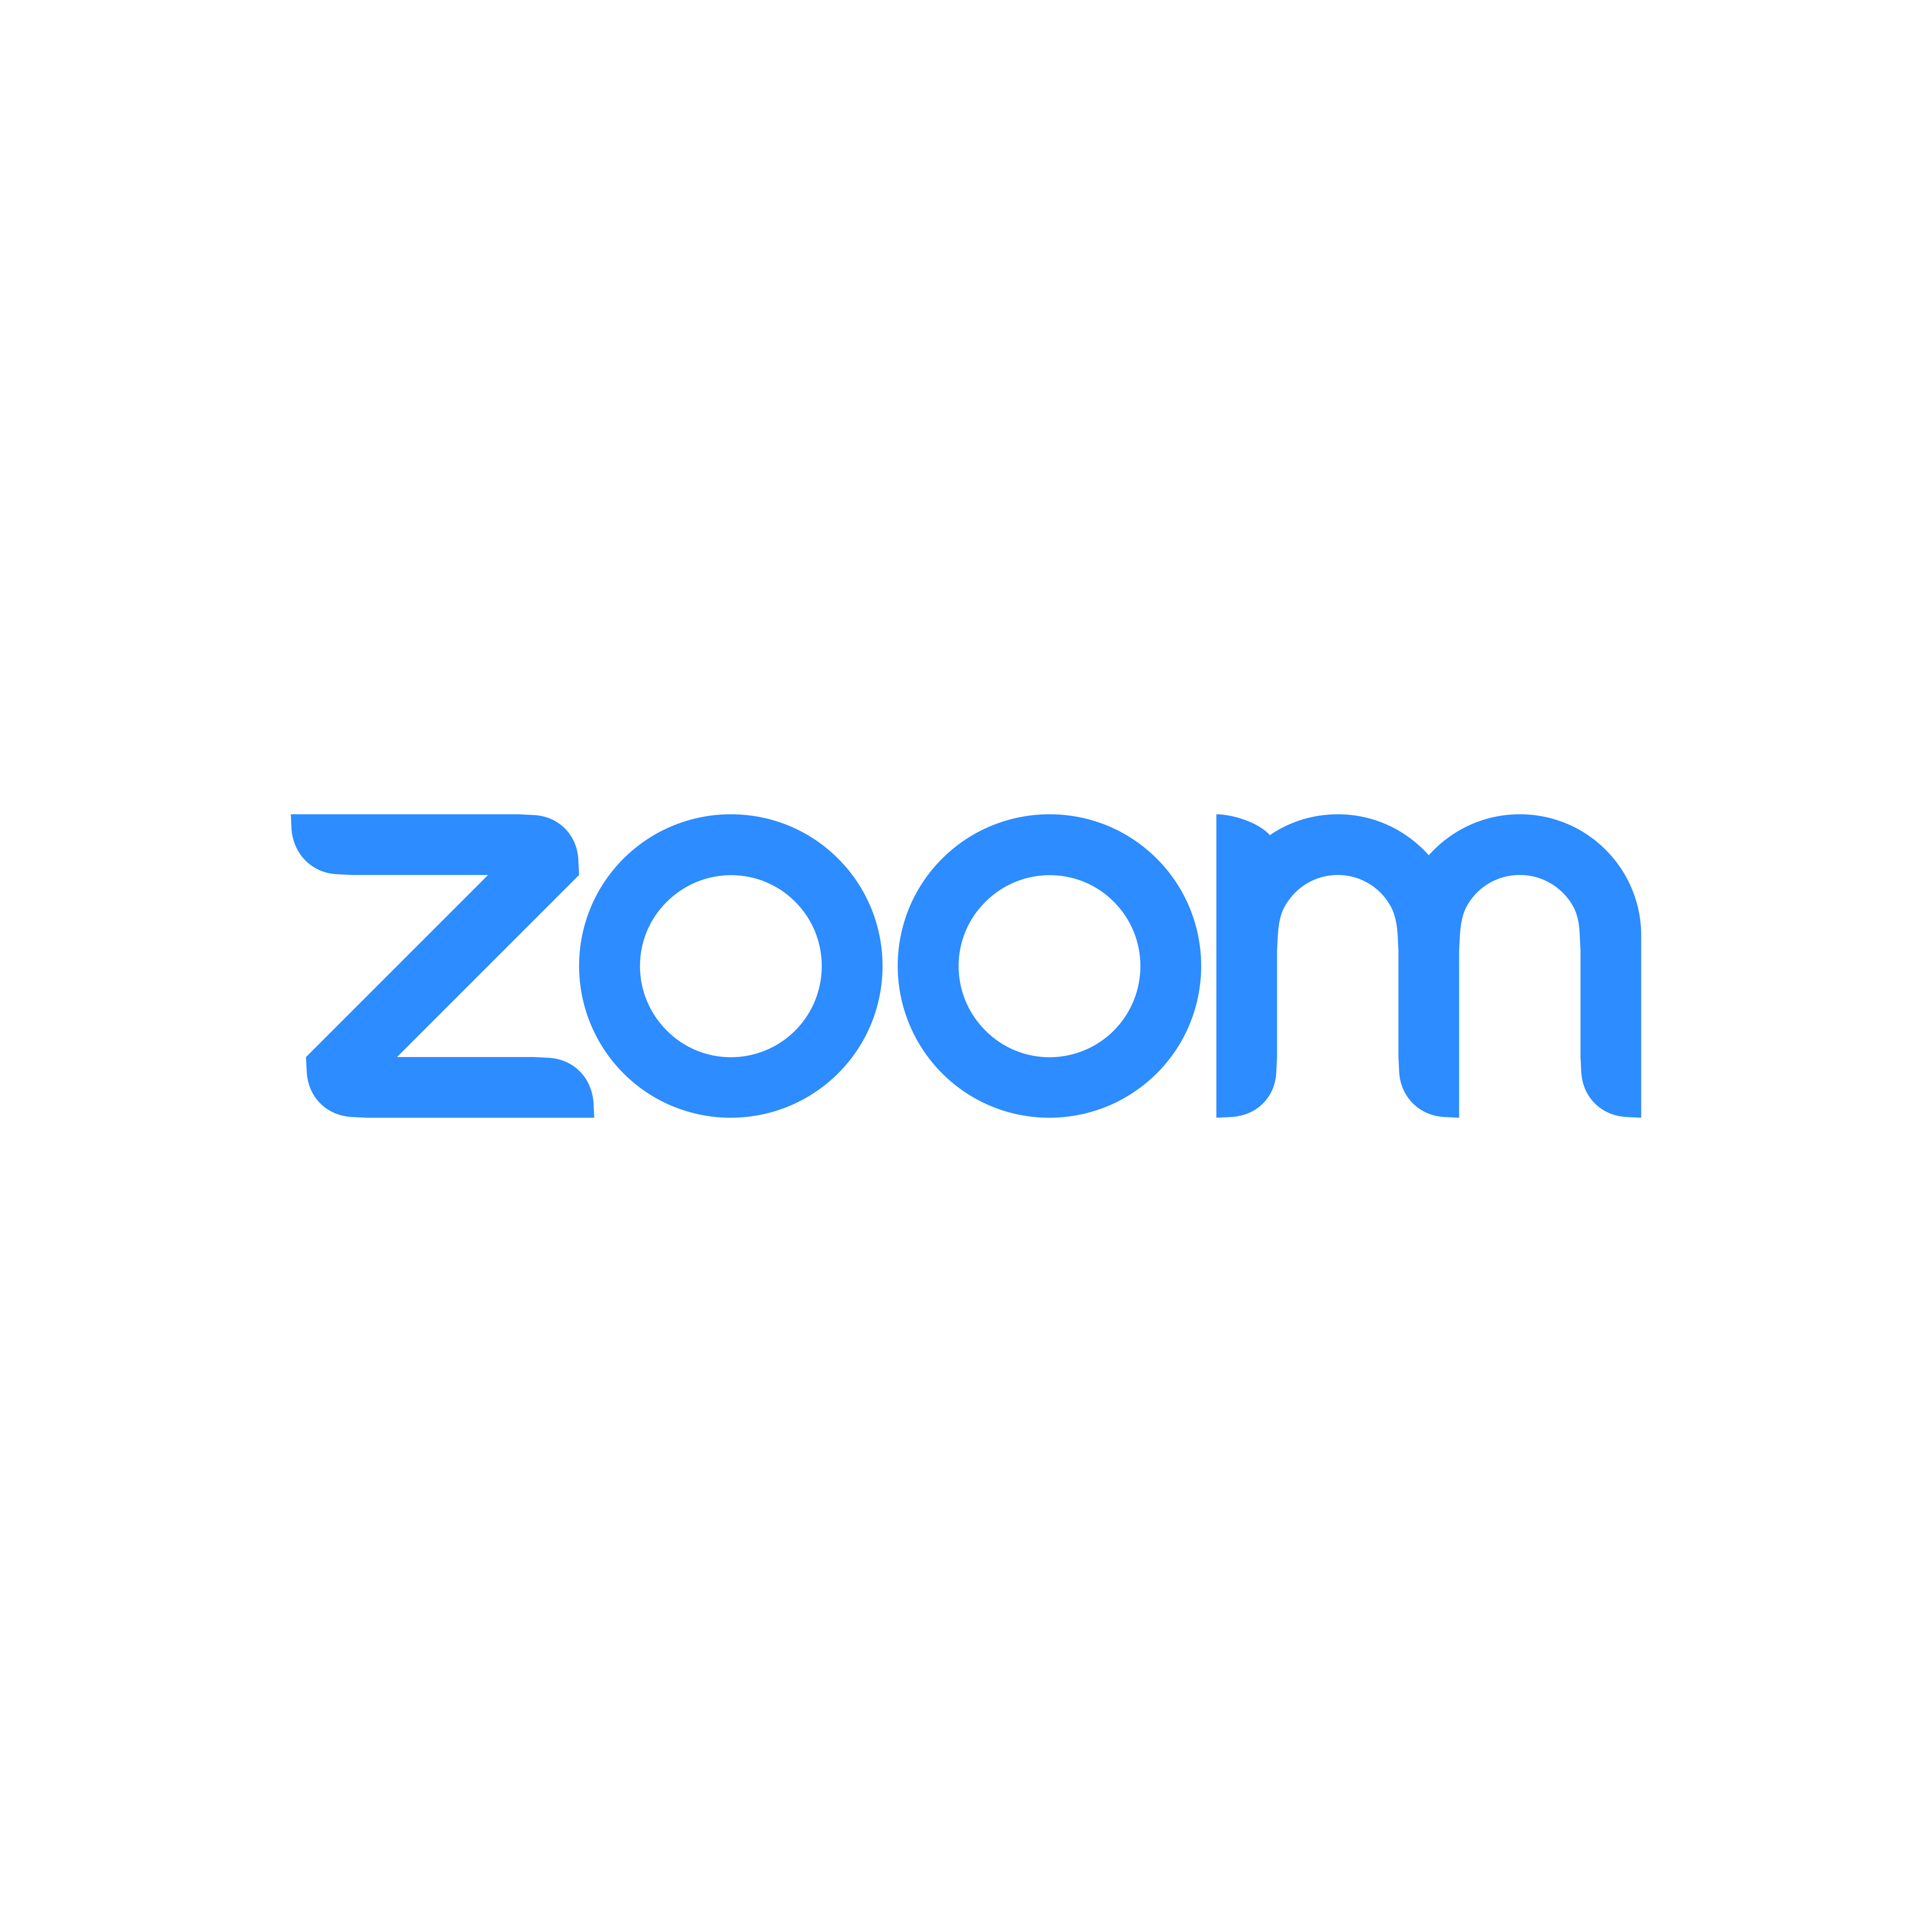 Zoom: How To Setup An Account